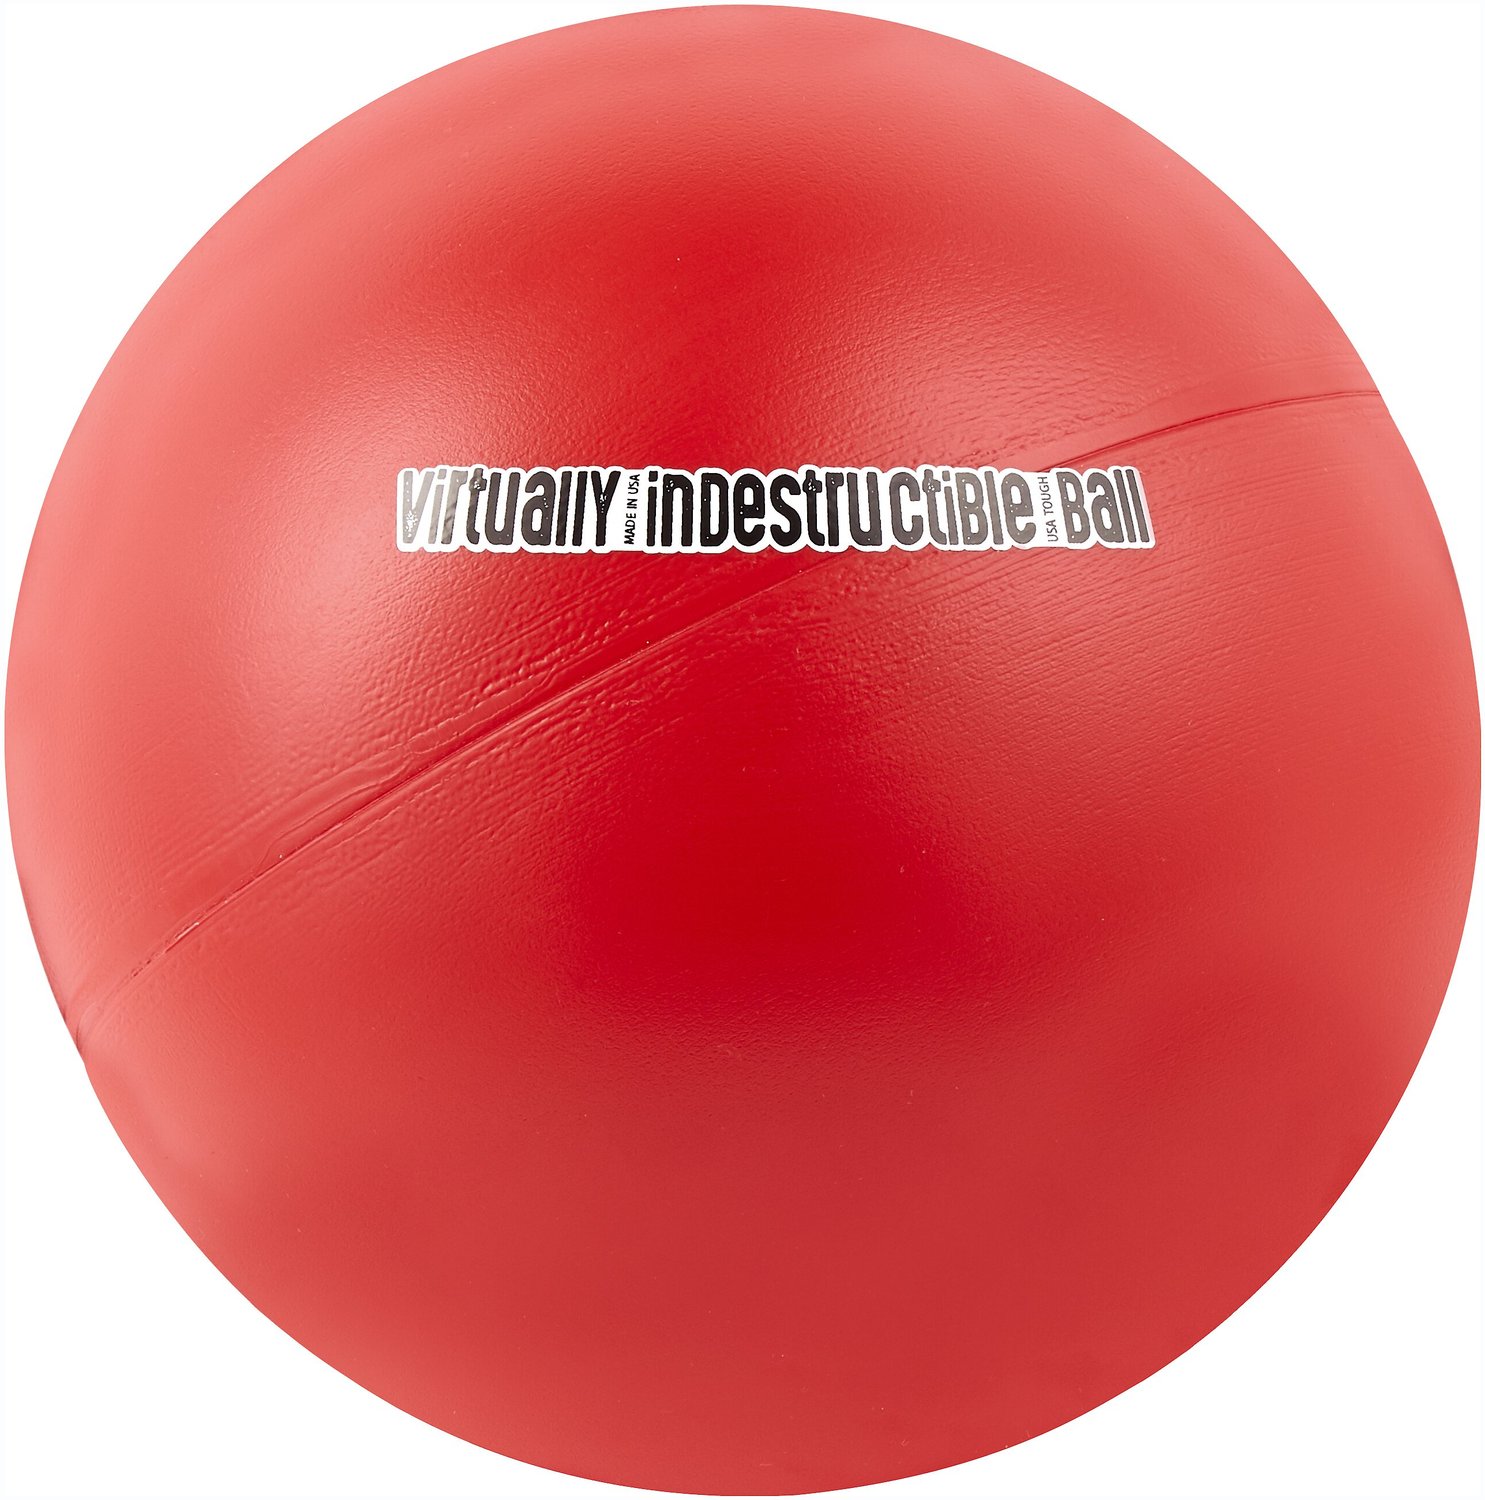 The Virtually Indestructible Dog Ball